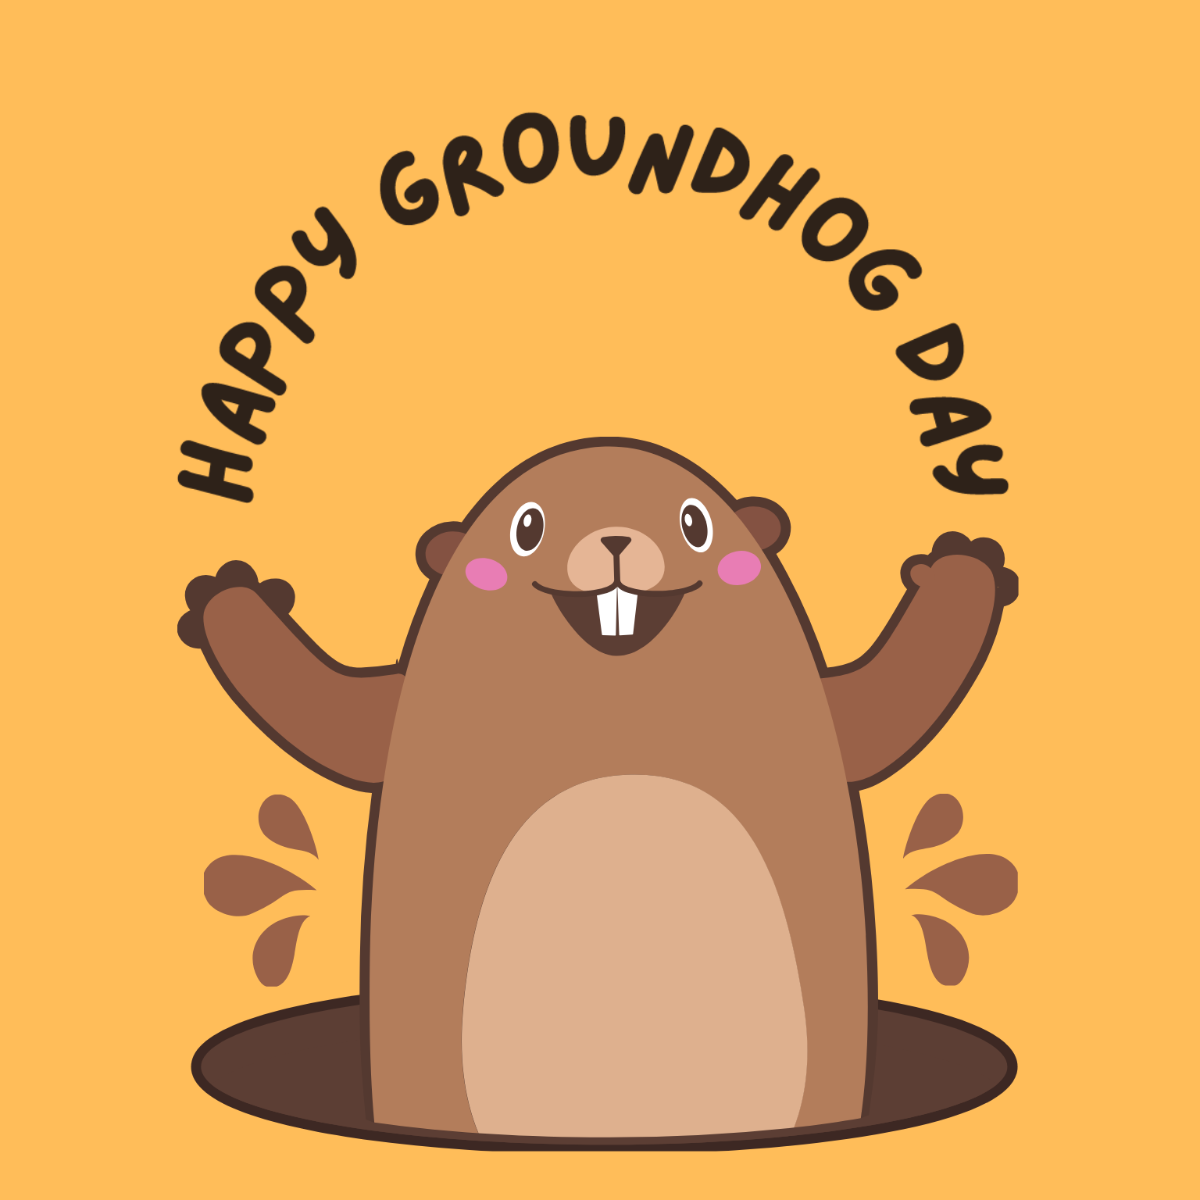 Groundhog Day Cartoon Vector Template